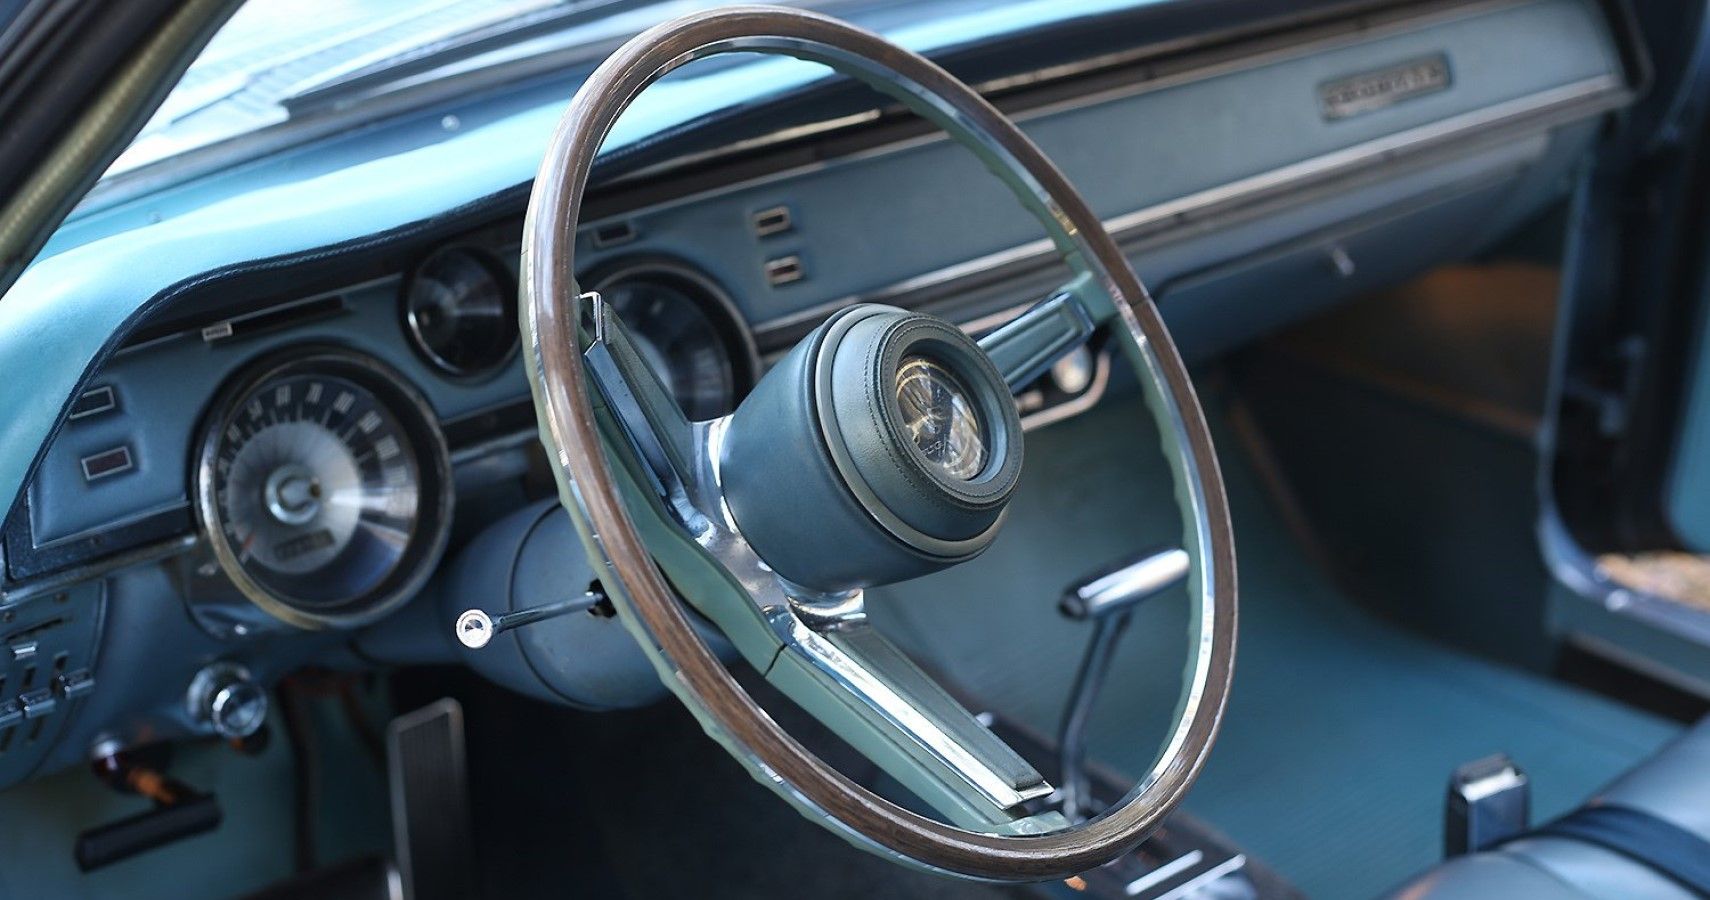 1967 Mercury Cougar Interior Dashboard View